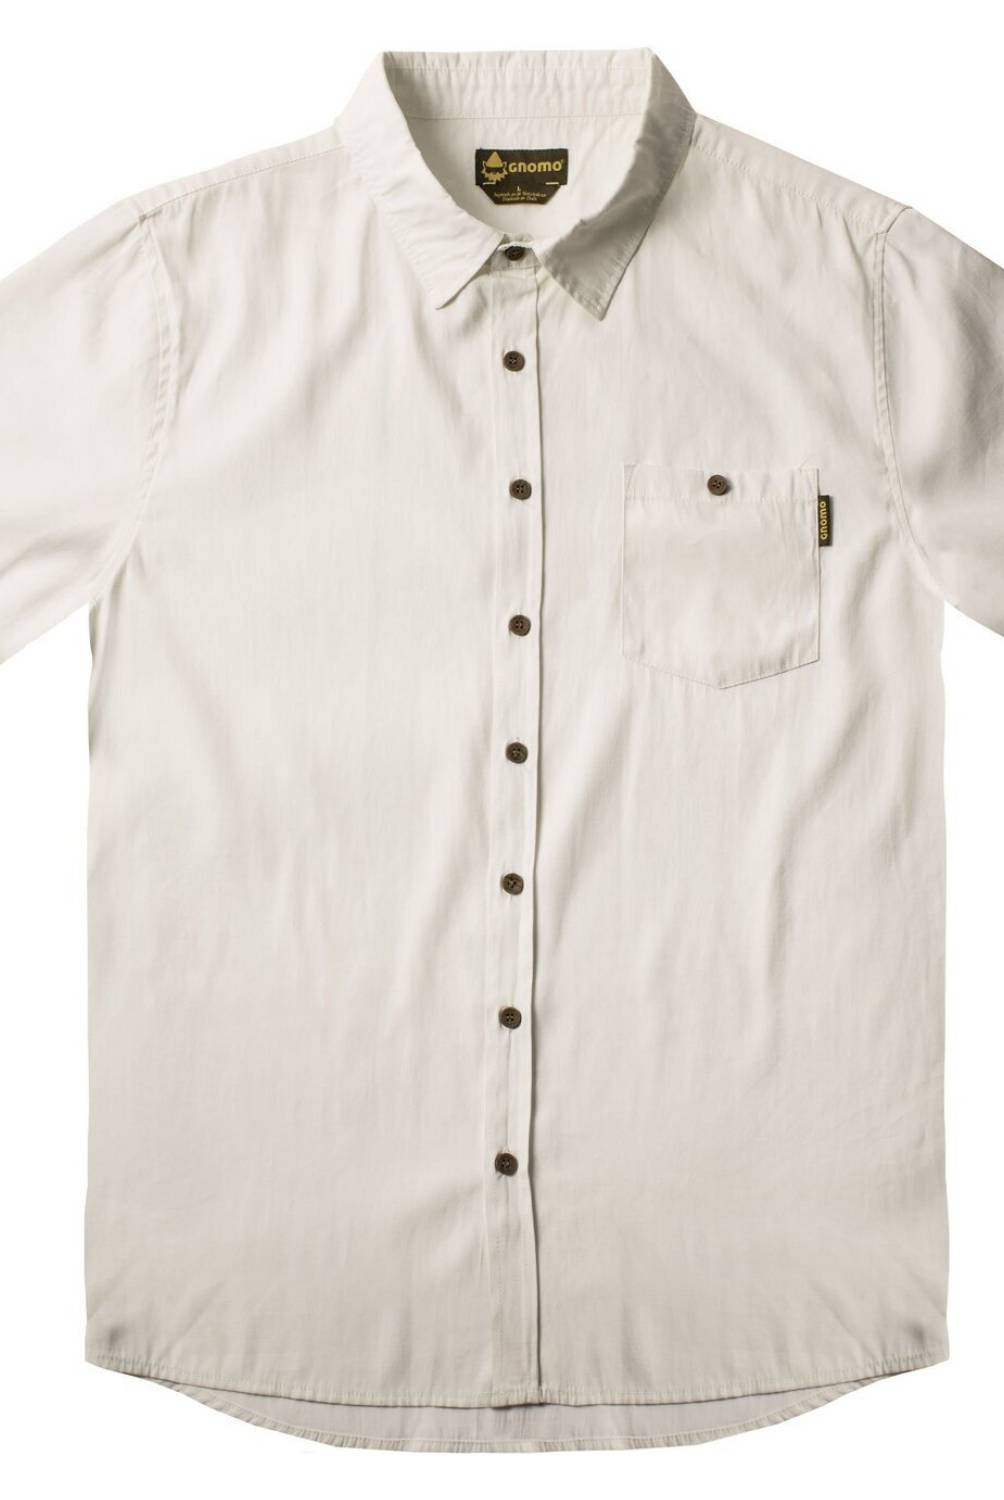 GNOMO - Camisa Hombre Nelka Bone Blanco